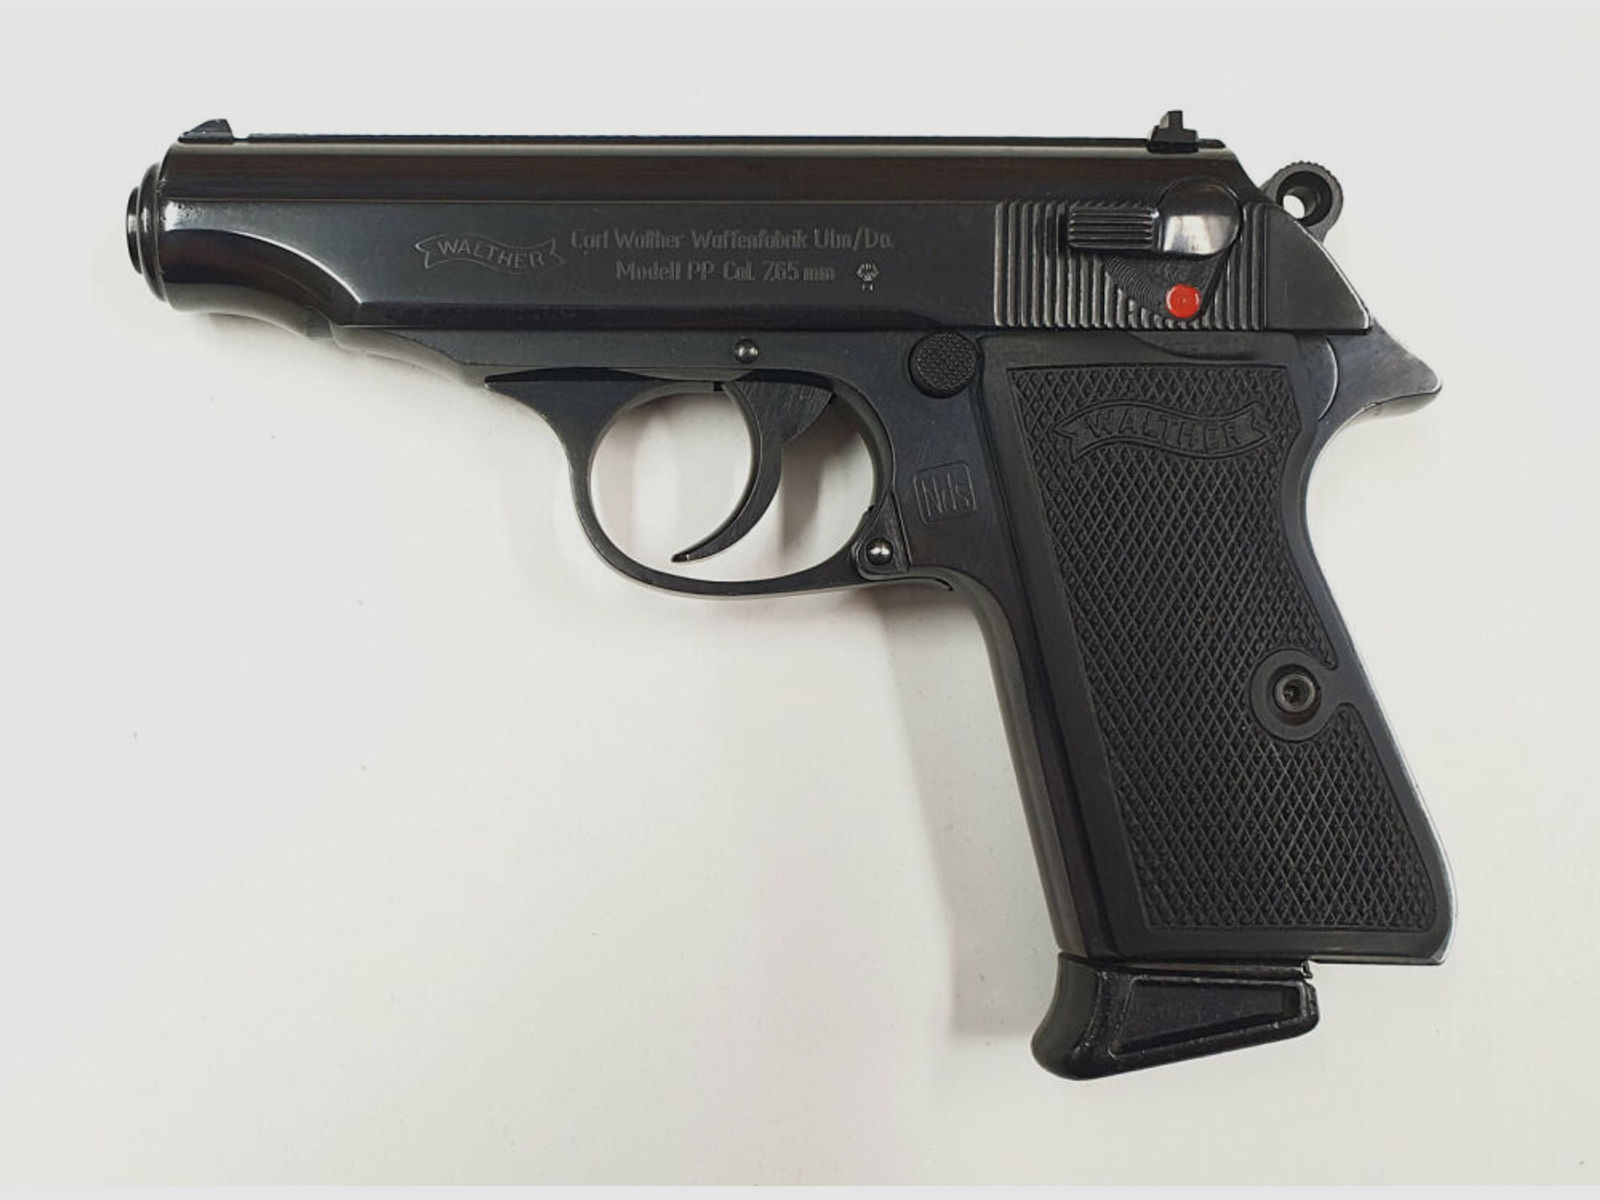 Walther	 Carl Walther PP Waffenfabrik Ulm/Do. Kaliber 7,65mm Browning Stempel Nds Polizei Niedersachsen